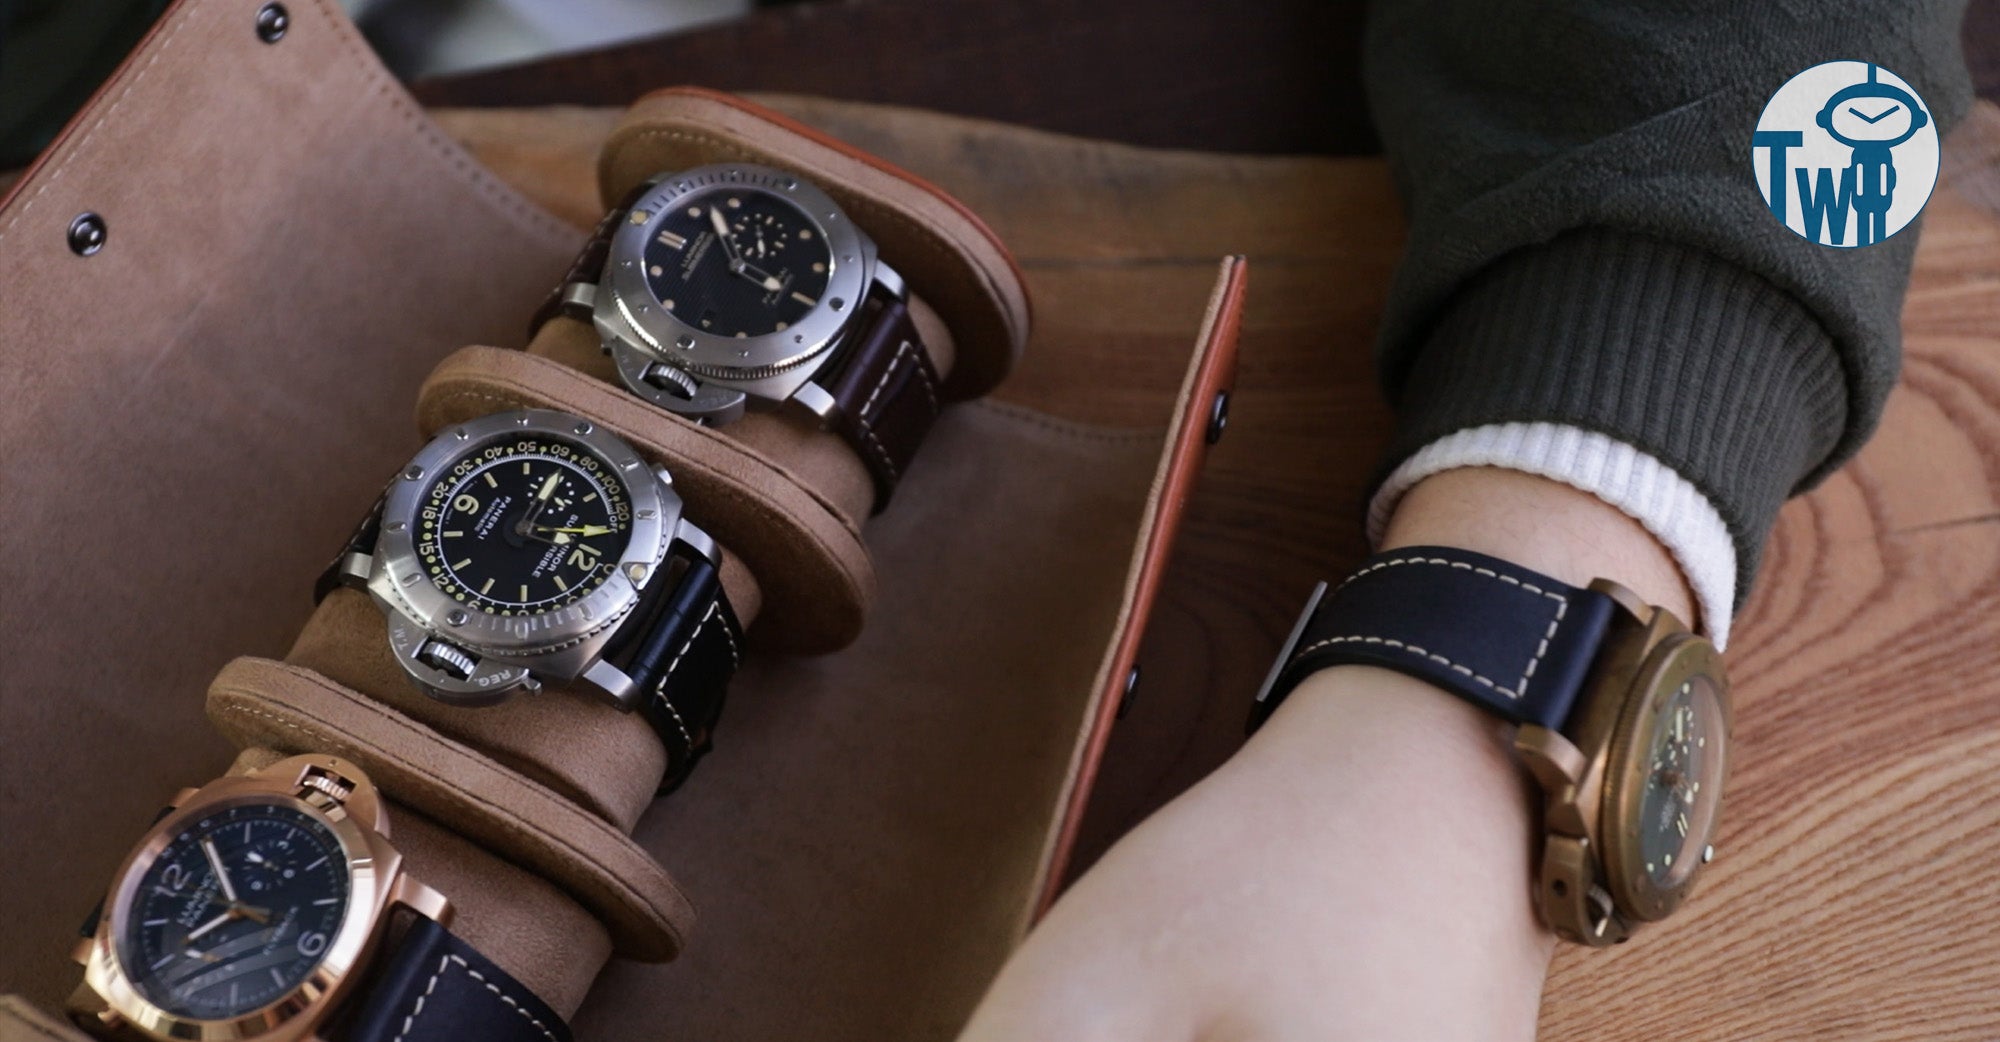 Panerai沛納海 讓所有擁有者輕鬆地透過更換錶帶，自由定制手錶，搭配不同的服裝或心情。